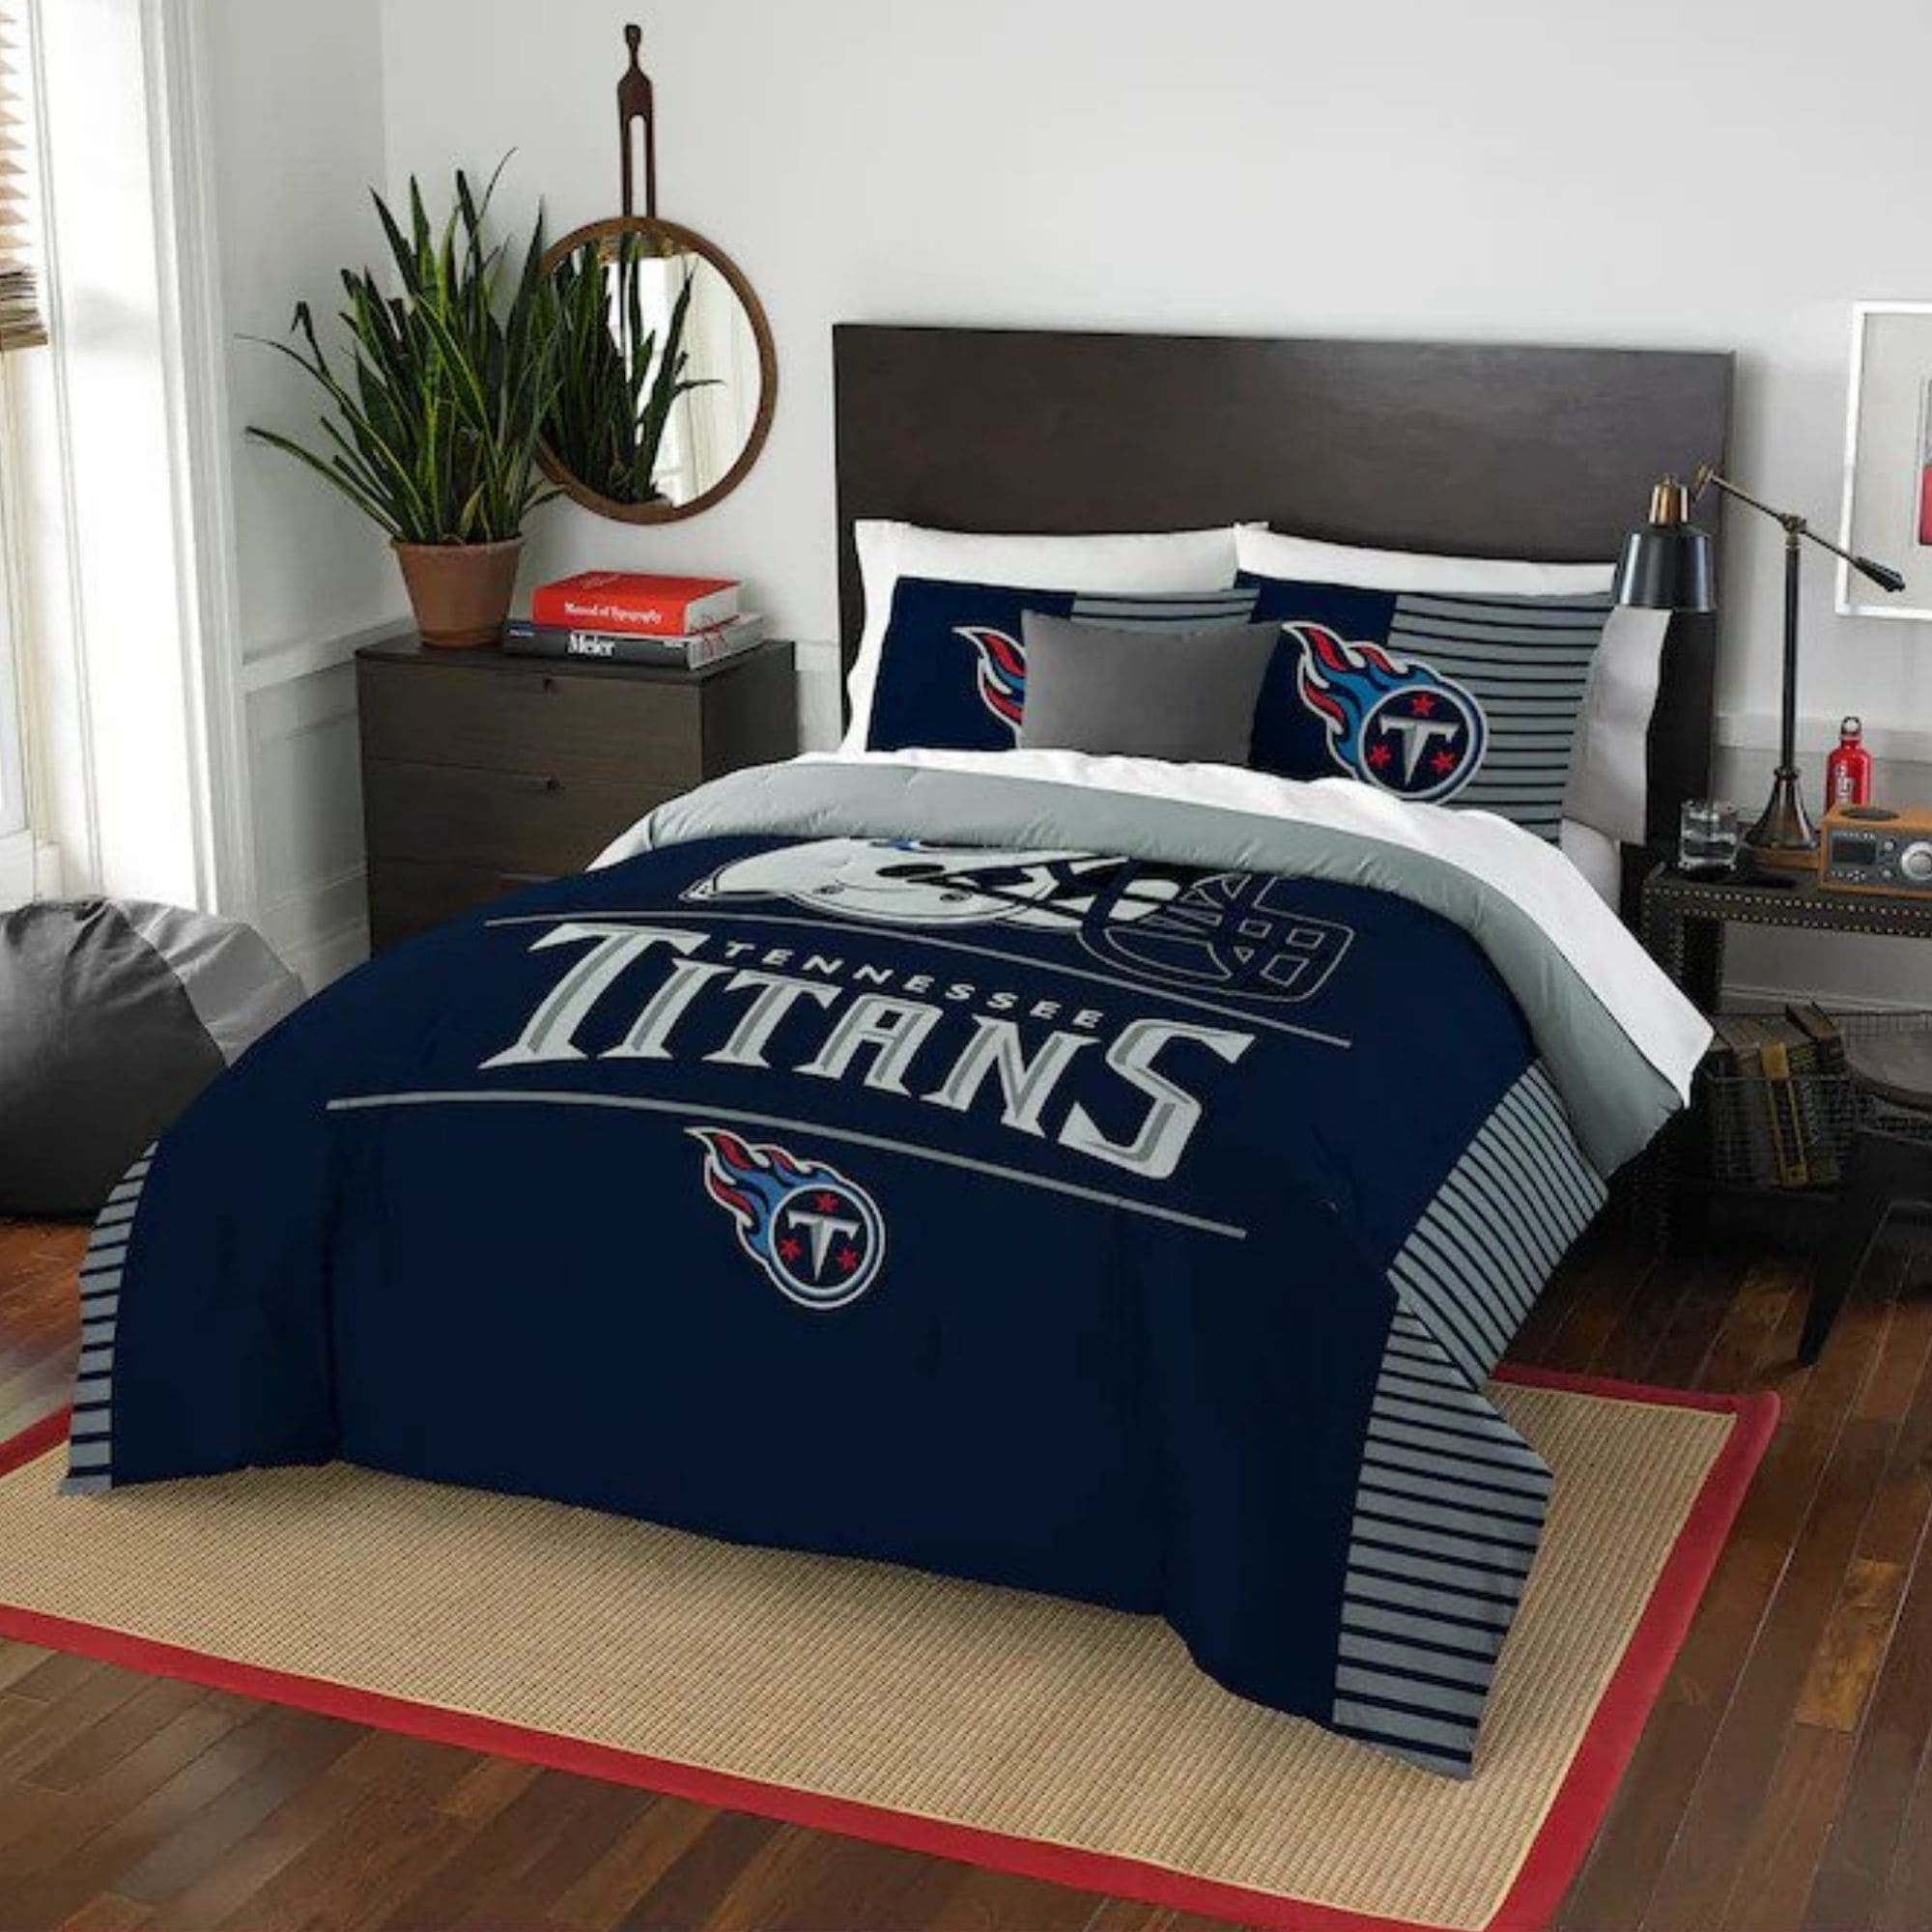 Tennessee Titans Bedding Set